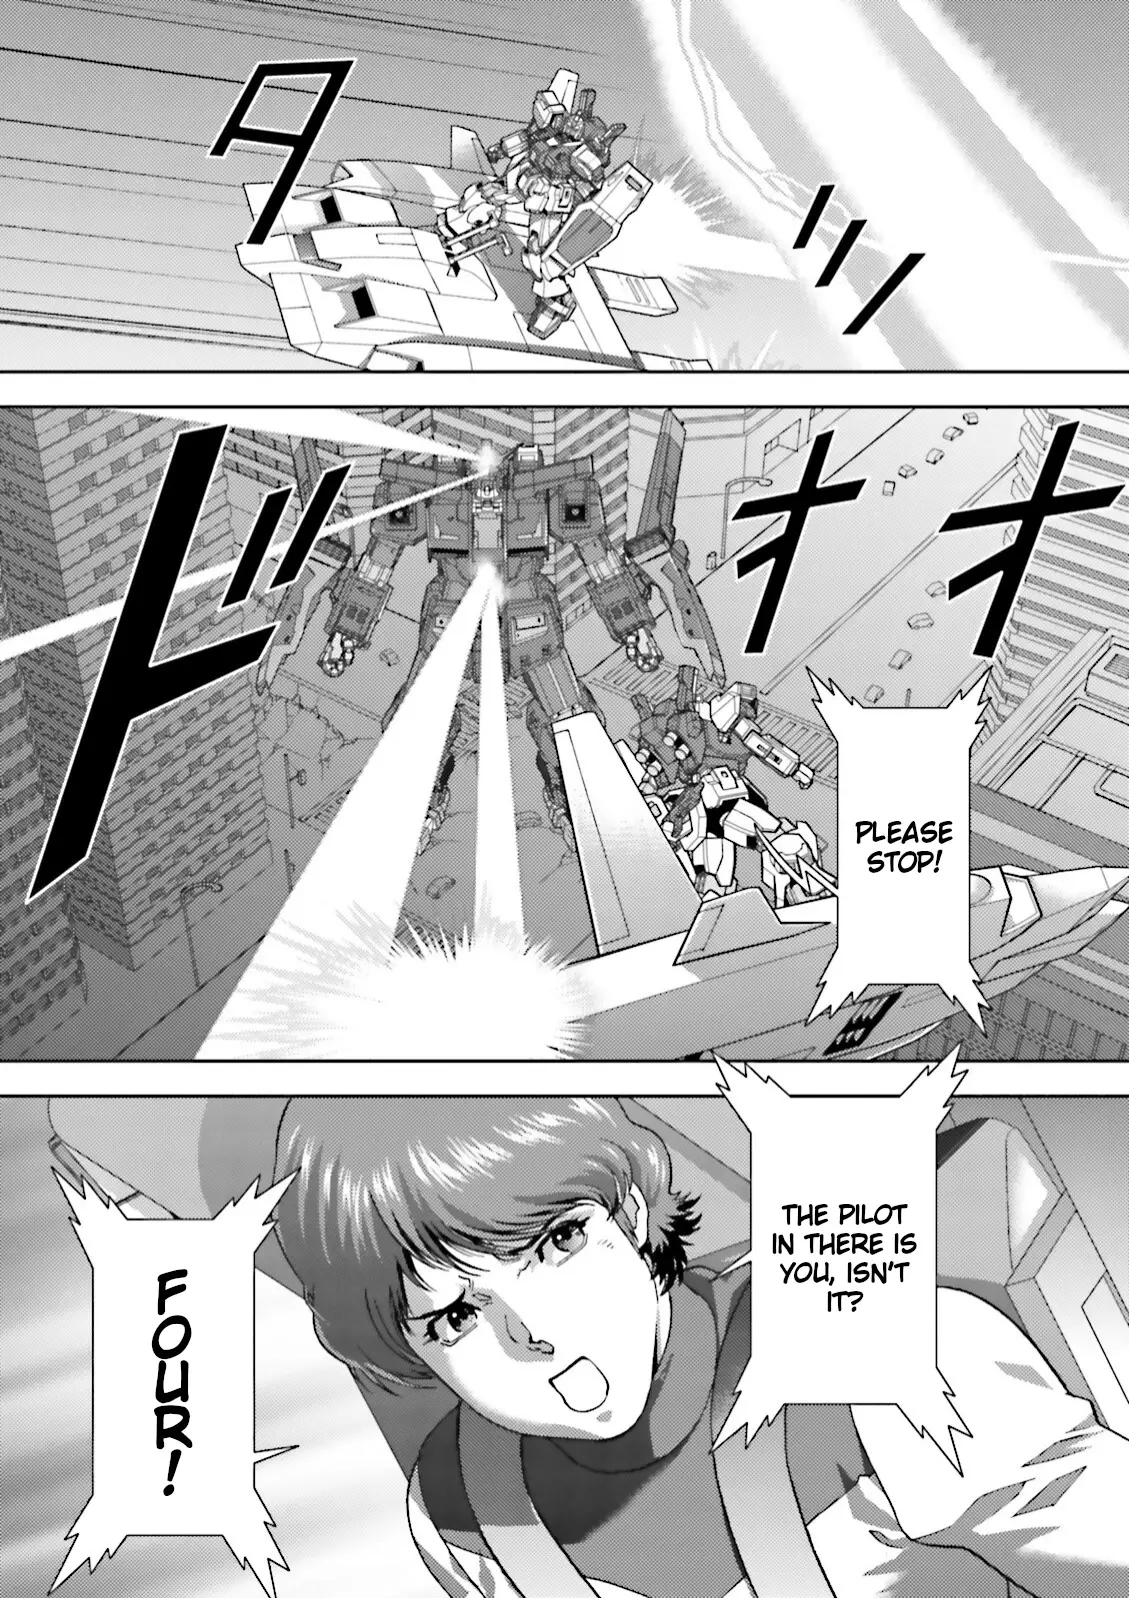 Mobile Suit Zeta Gundam - Define - 40 page 9-61466461